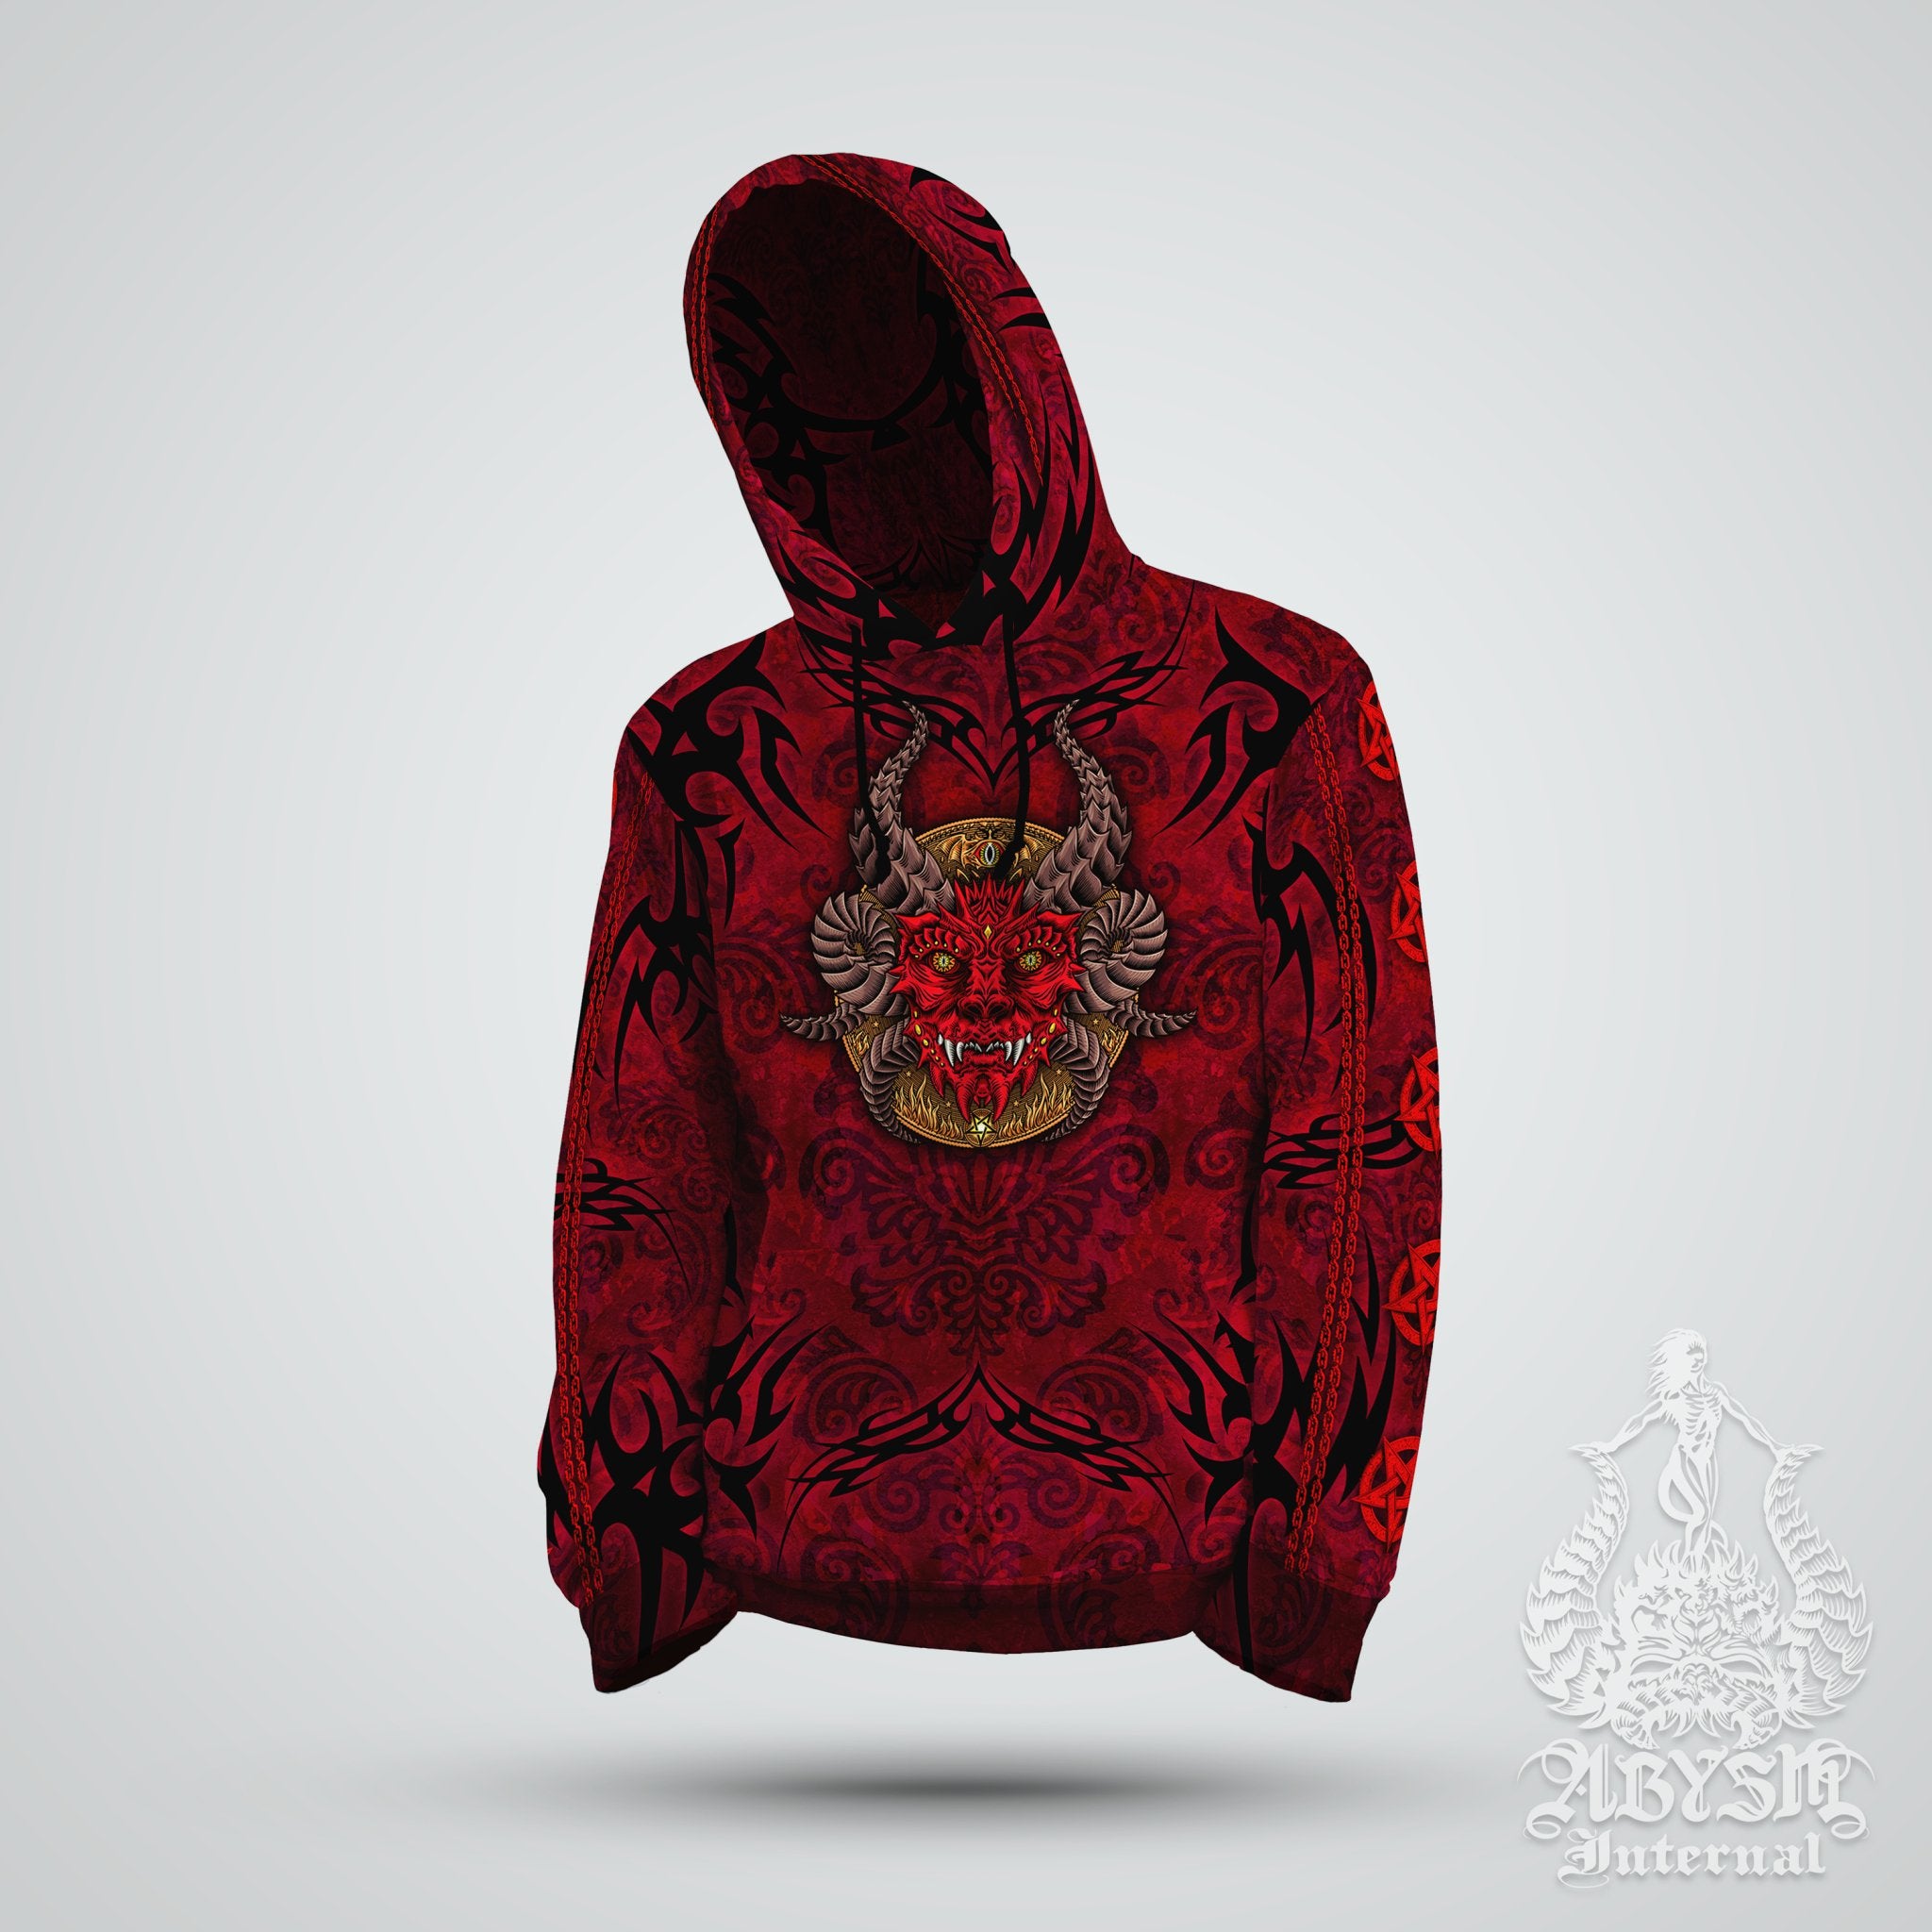 Devil Hoodie, Satanic Streetwear, Gothic Pentagram Outfit, Black Metal Concert Sweater, Alternative Clothing, Unisex - Lucifer, Black or Red, 2 Colors - Abysm Internal